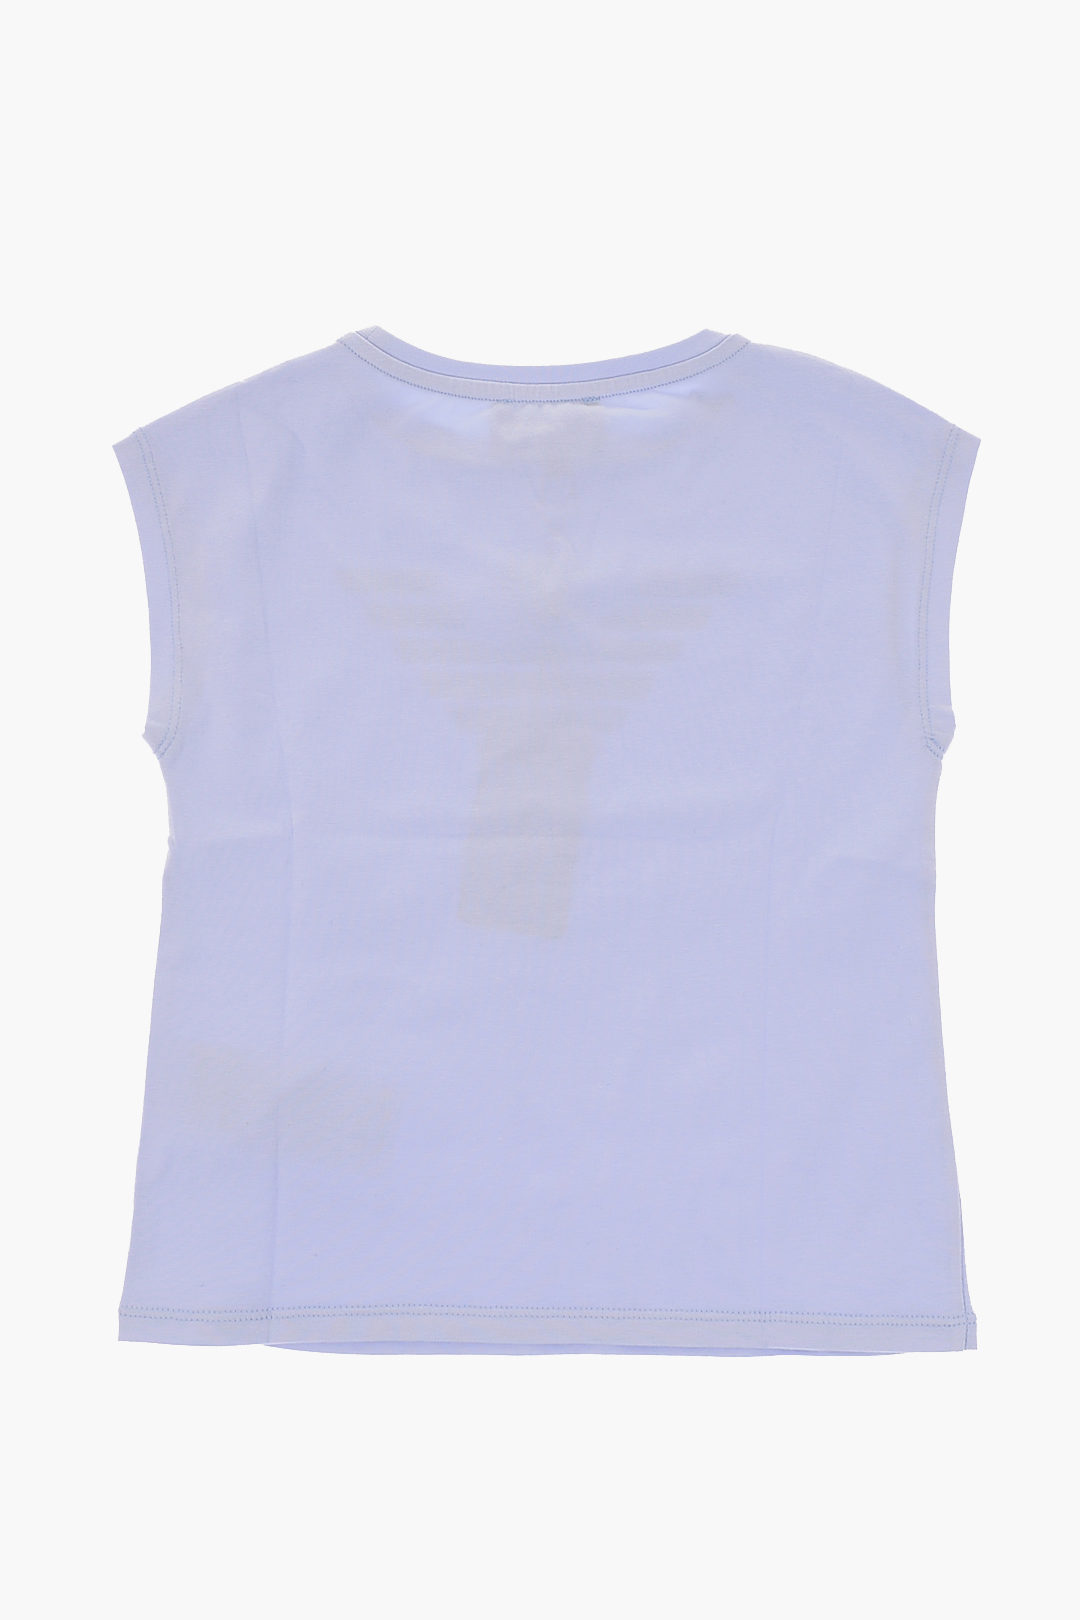 sleeveless t shirts for girls